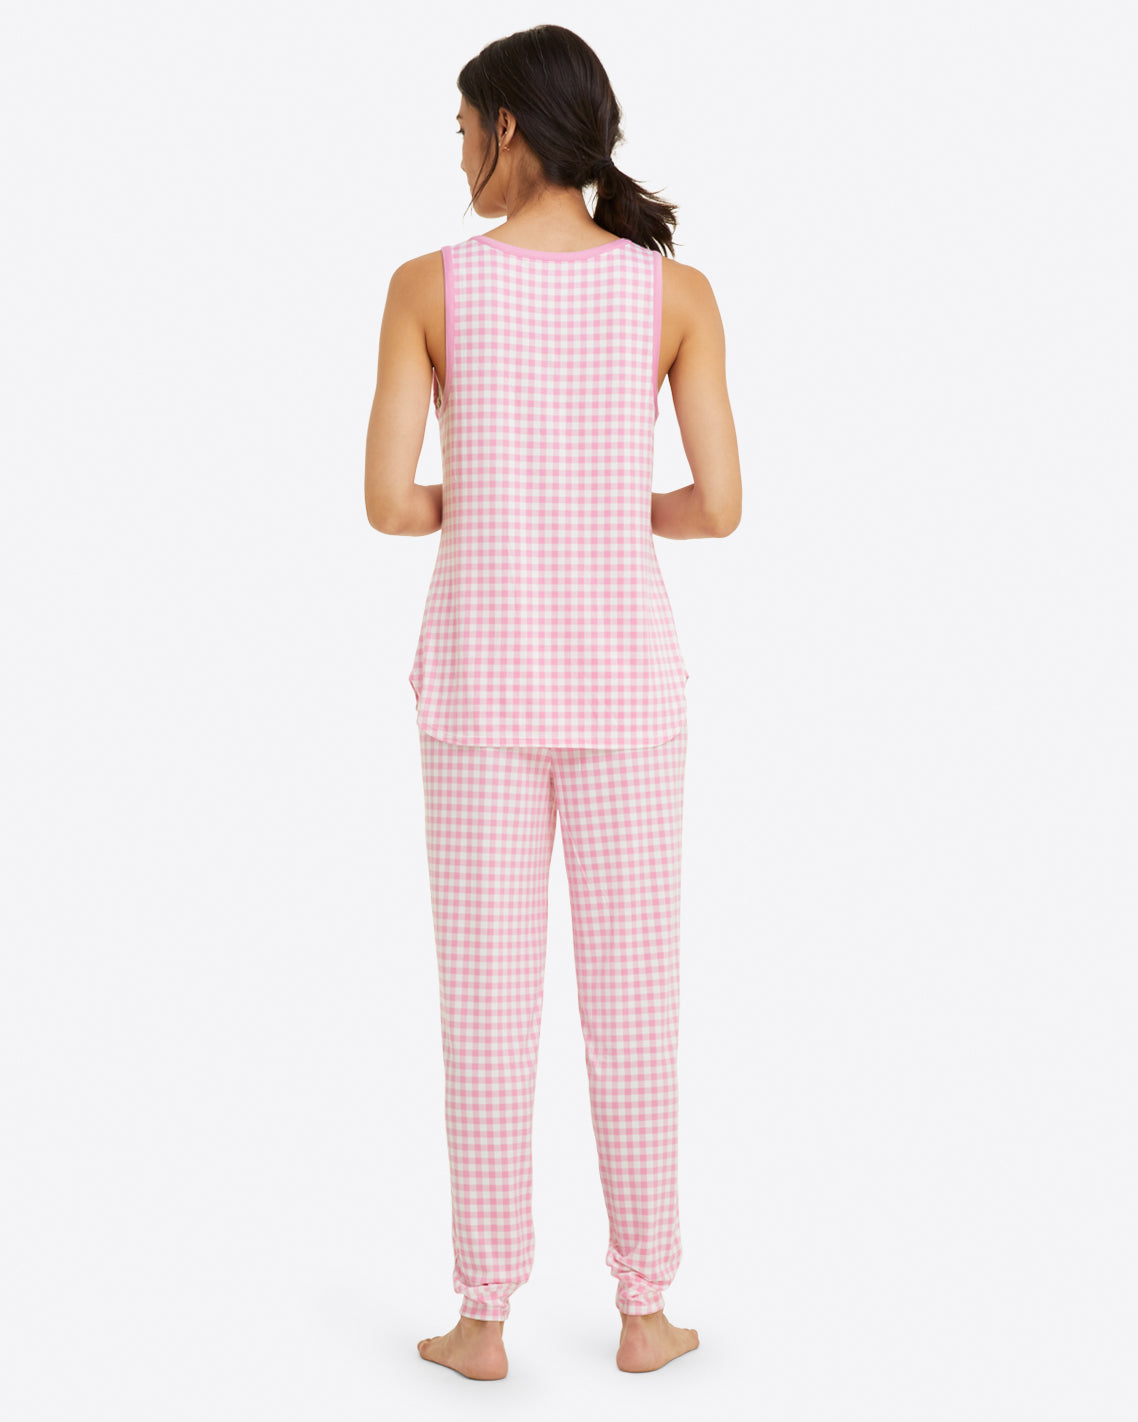 Hillary Pajama Set in Light Pink Gingham